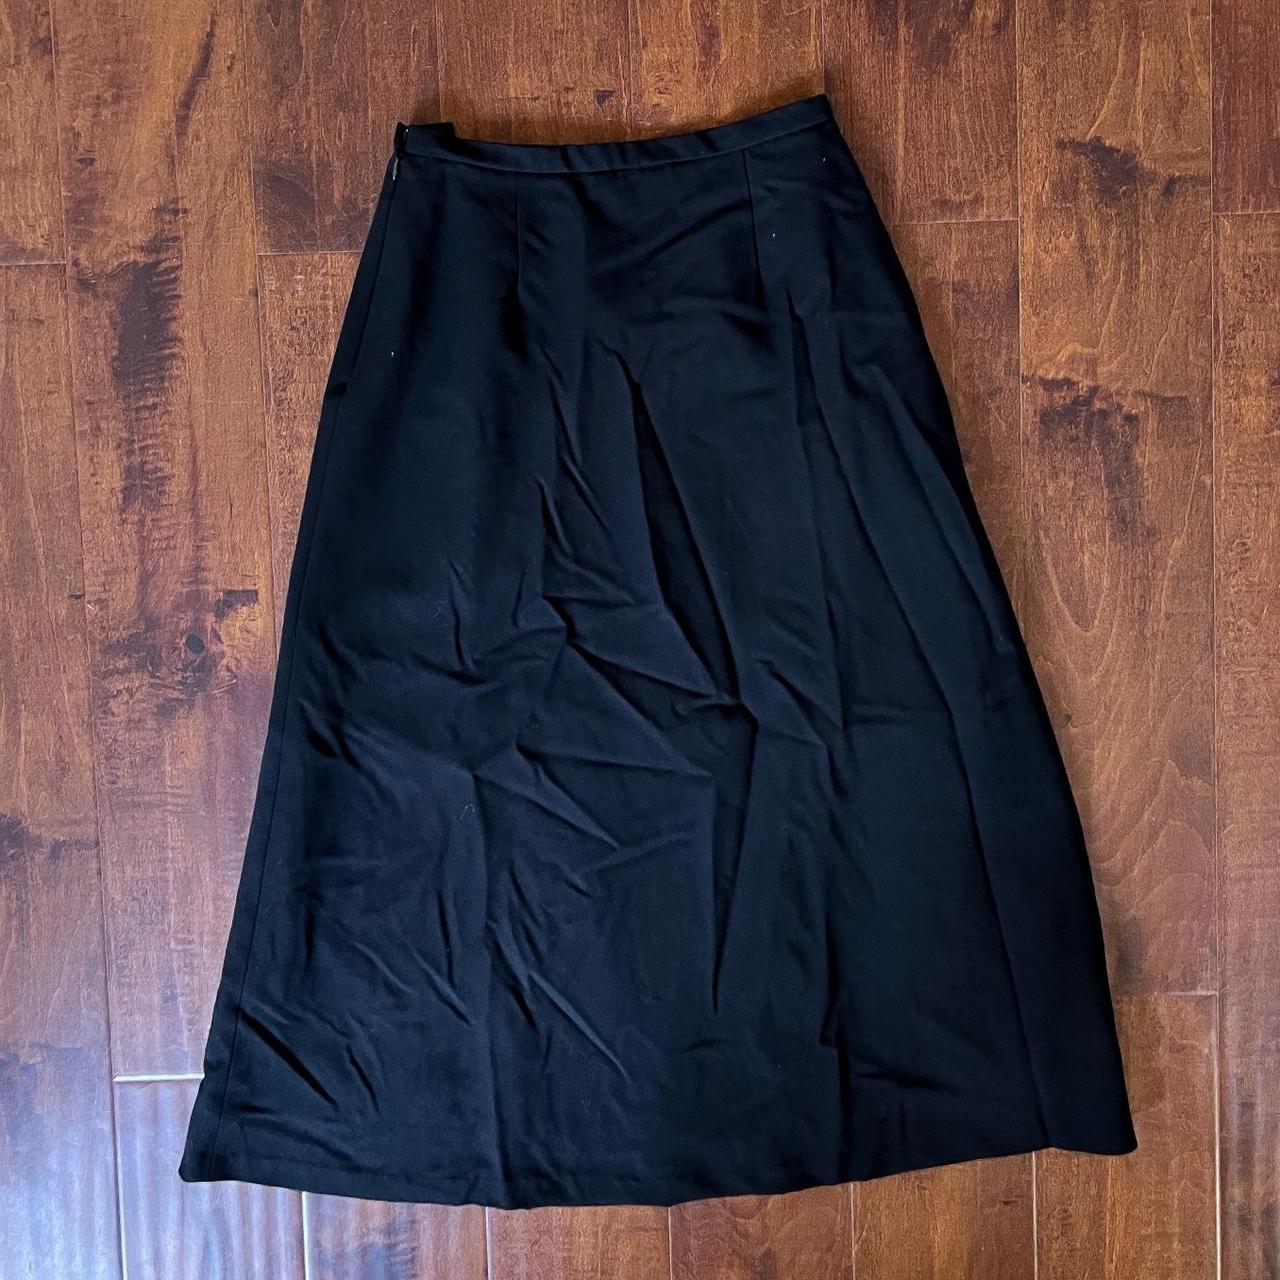 Product Image 4 - Black Gothic Skirt

Vintage long maxi